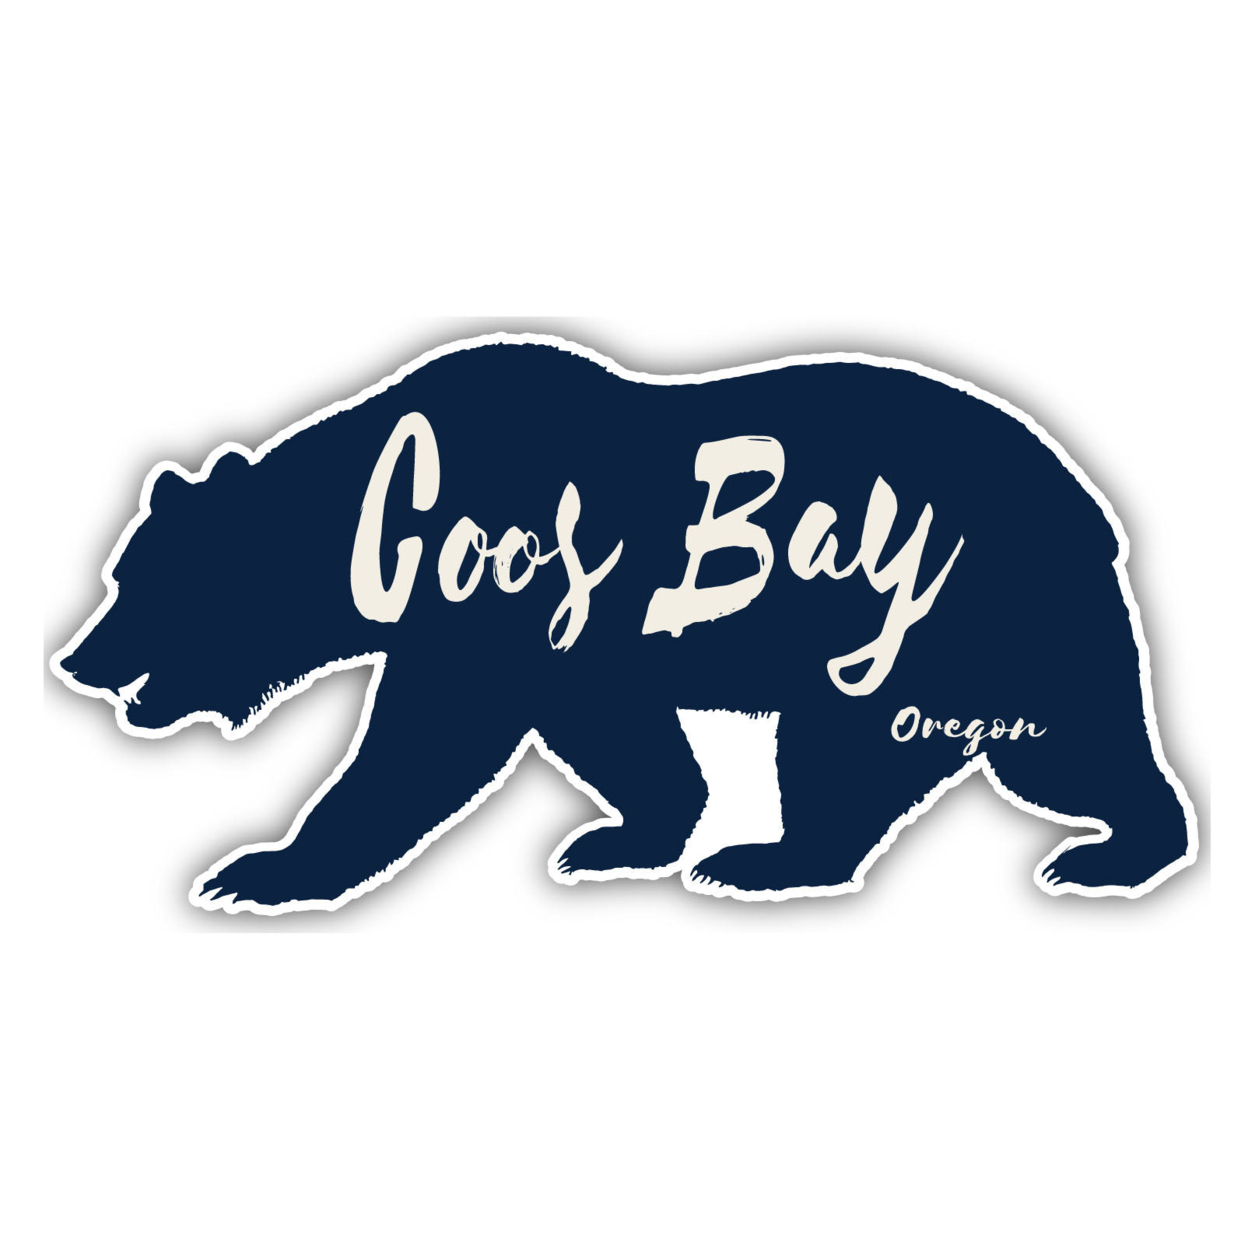 Coos Bay Oregon Souvenir Decorative Stickers (Choose Theme And Size) - Single Unit, 4-Inch, Adventures Awaits